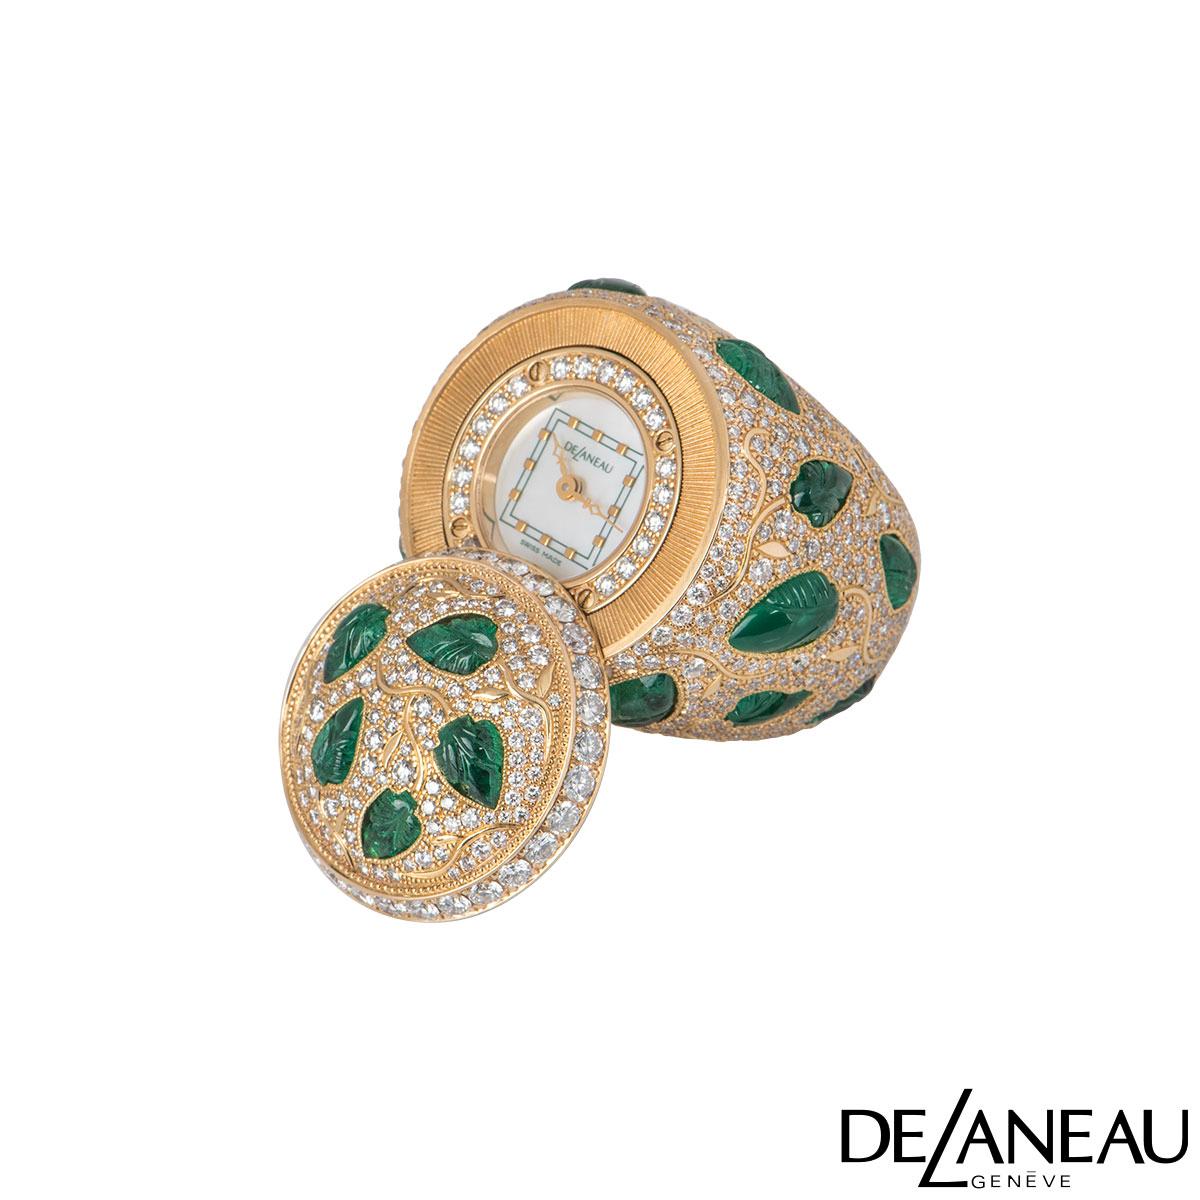 Women's or Men's Rare DeLaneau Rose Gold, Diamond and Emerald Ring Watch 7.60 Carat IGR Certified